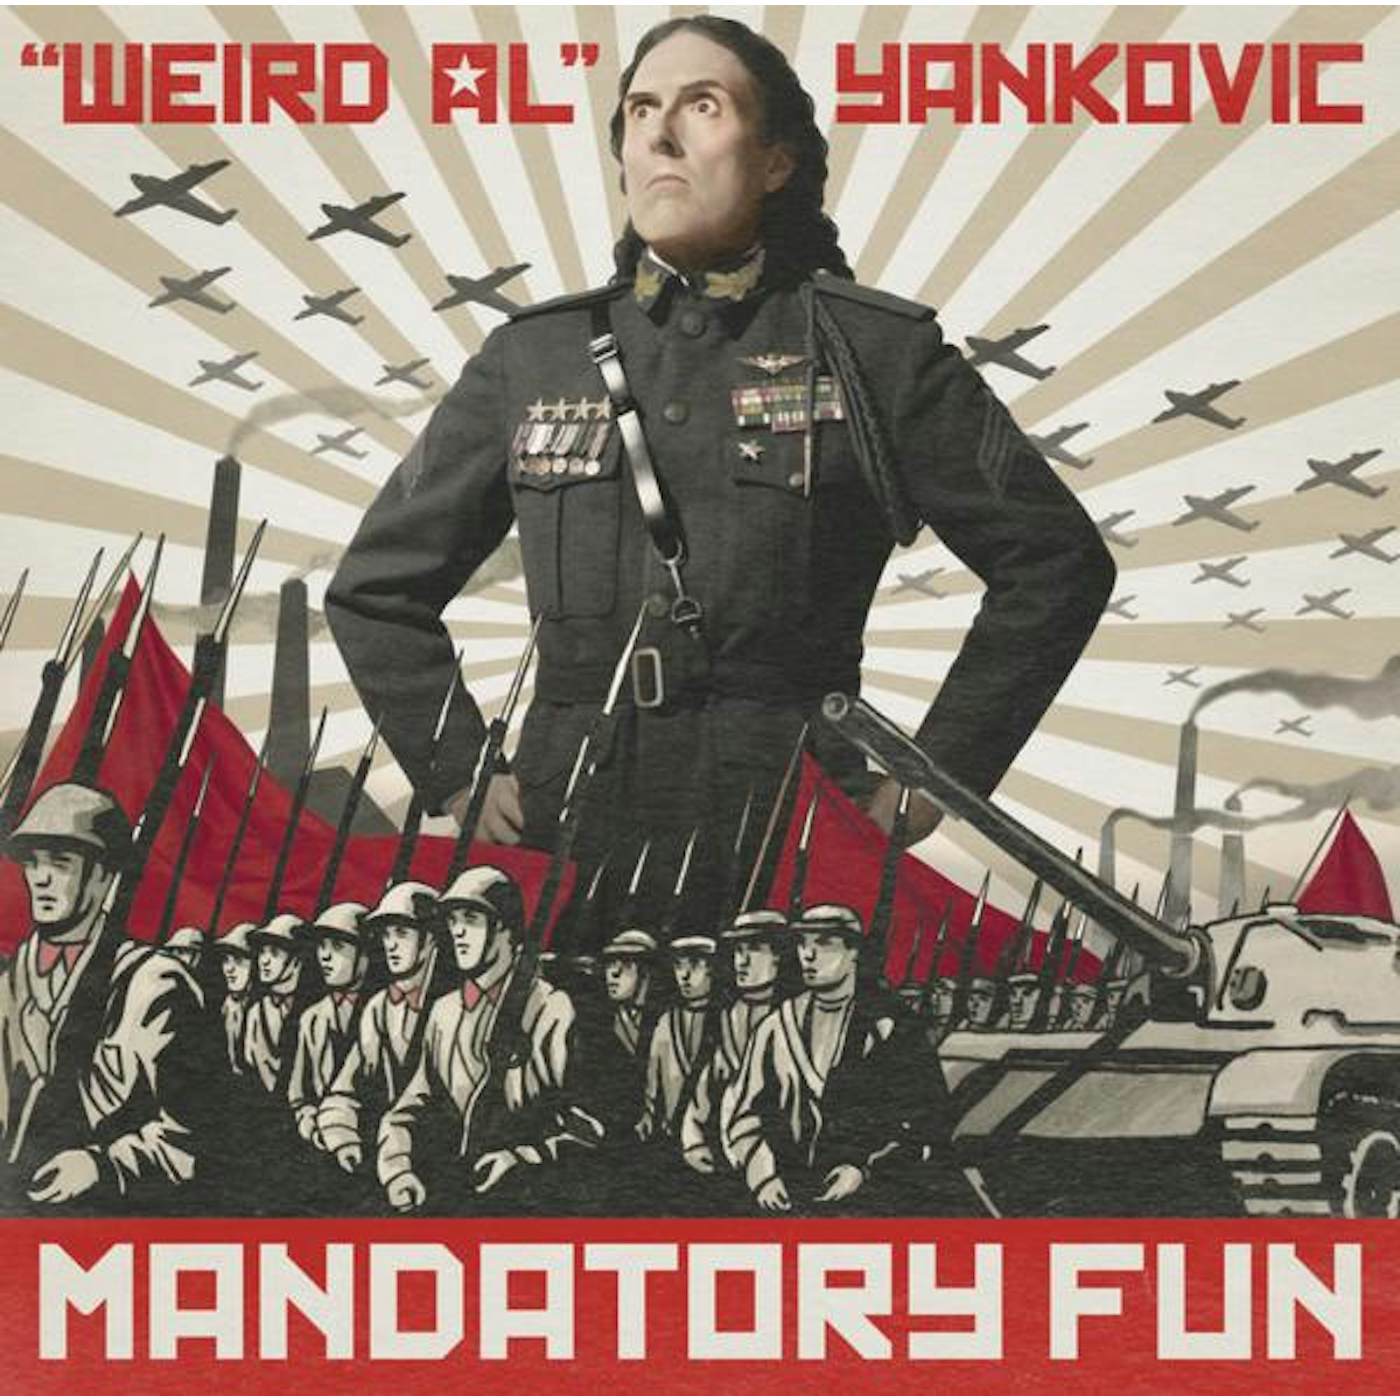 "Weird Al" Yankovic MANDATORY FUN CD